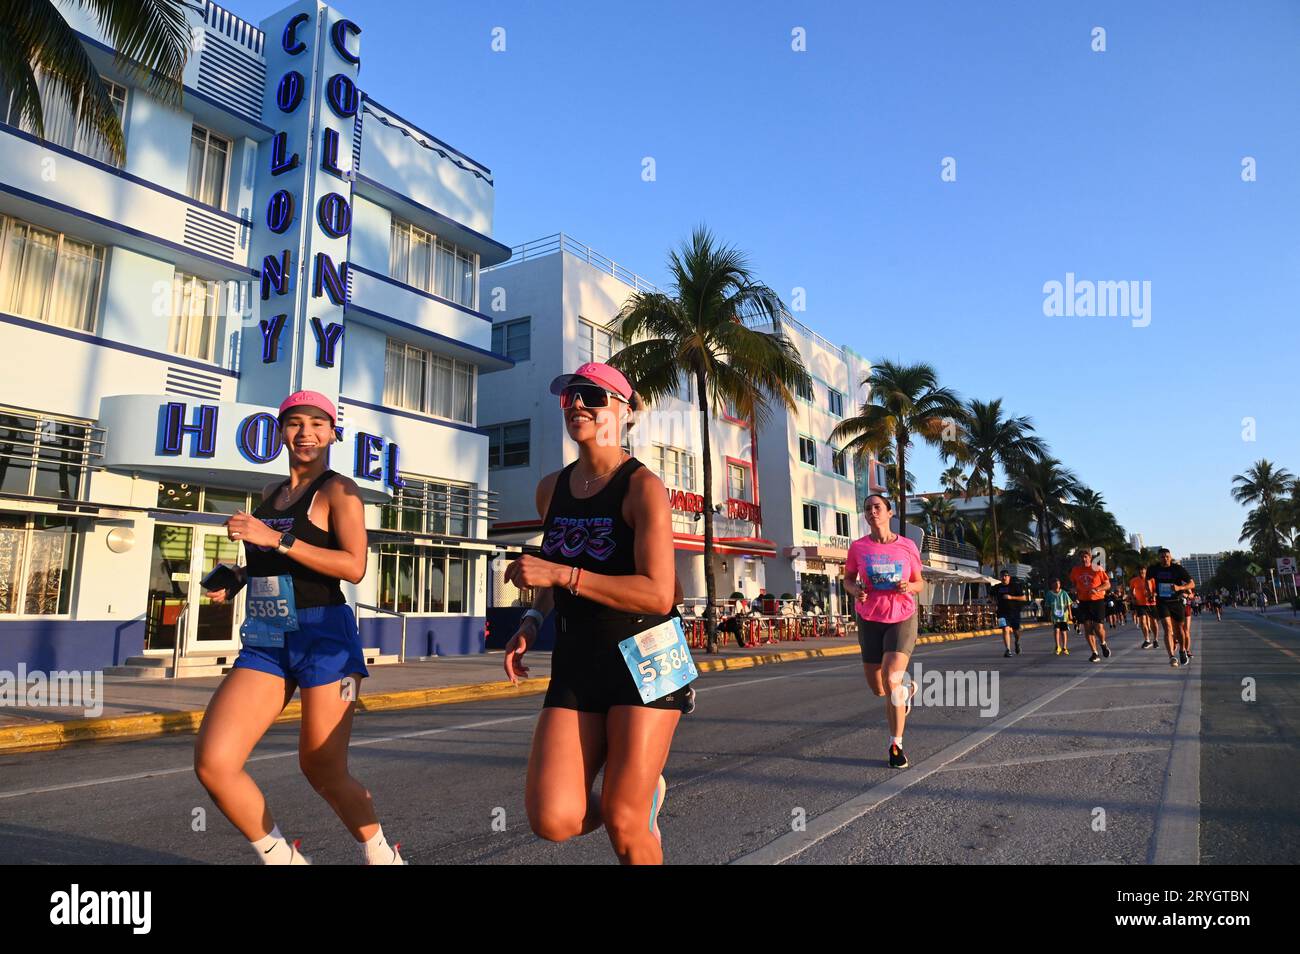 https://c8.alamy.com/comp/2RYGTBN/usa-florida-miami-women-running-for-the-semi-marathon-of-miami-along-the-art-deco-buidings-of-ocean-drive-2RYGTBN.jpg